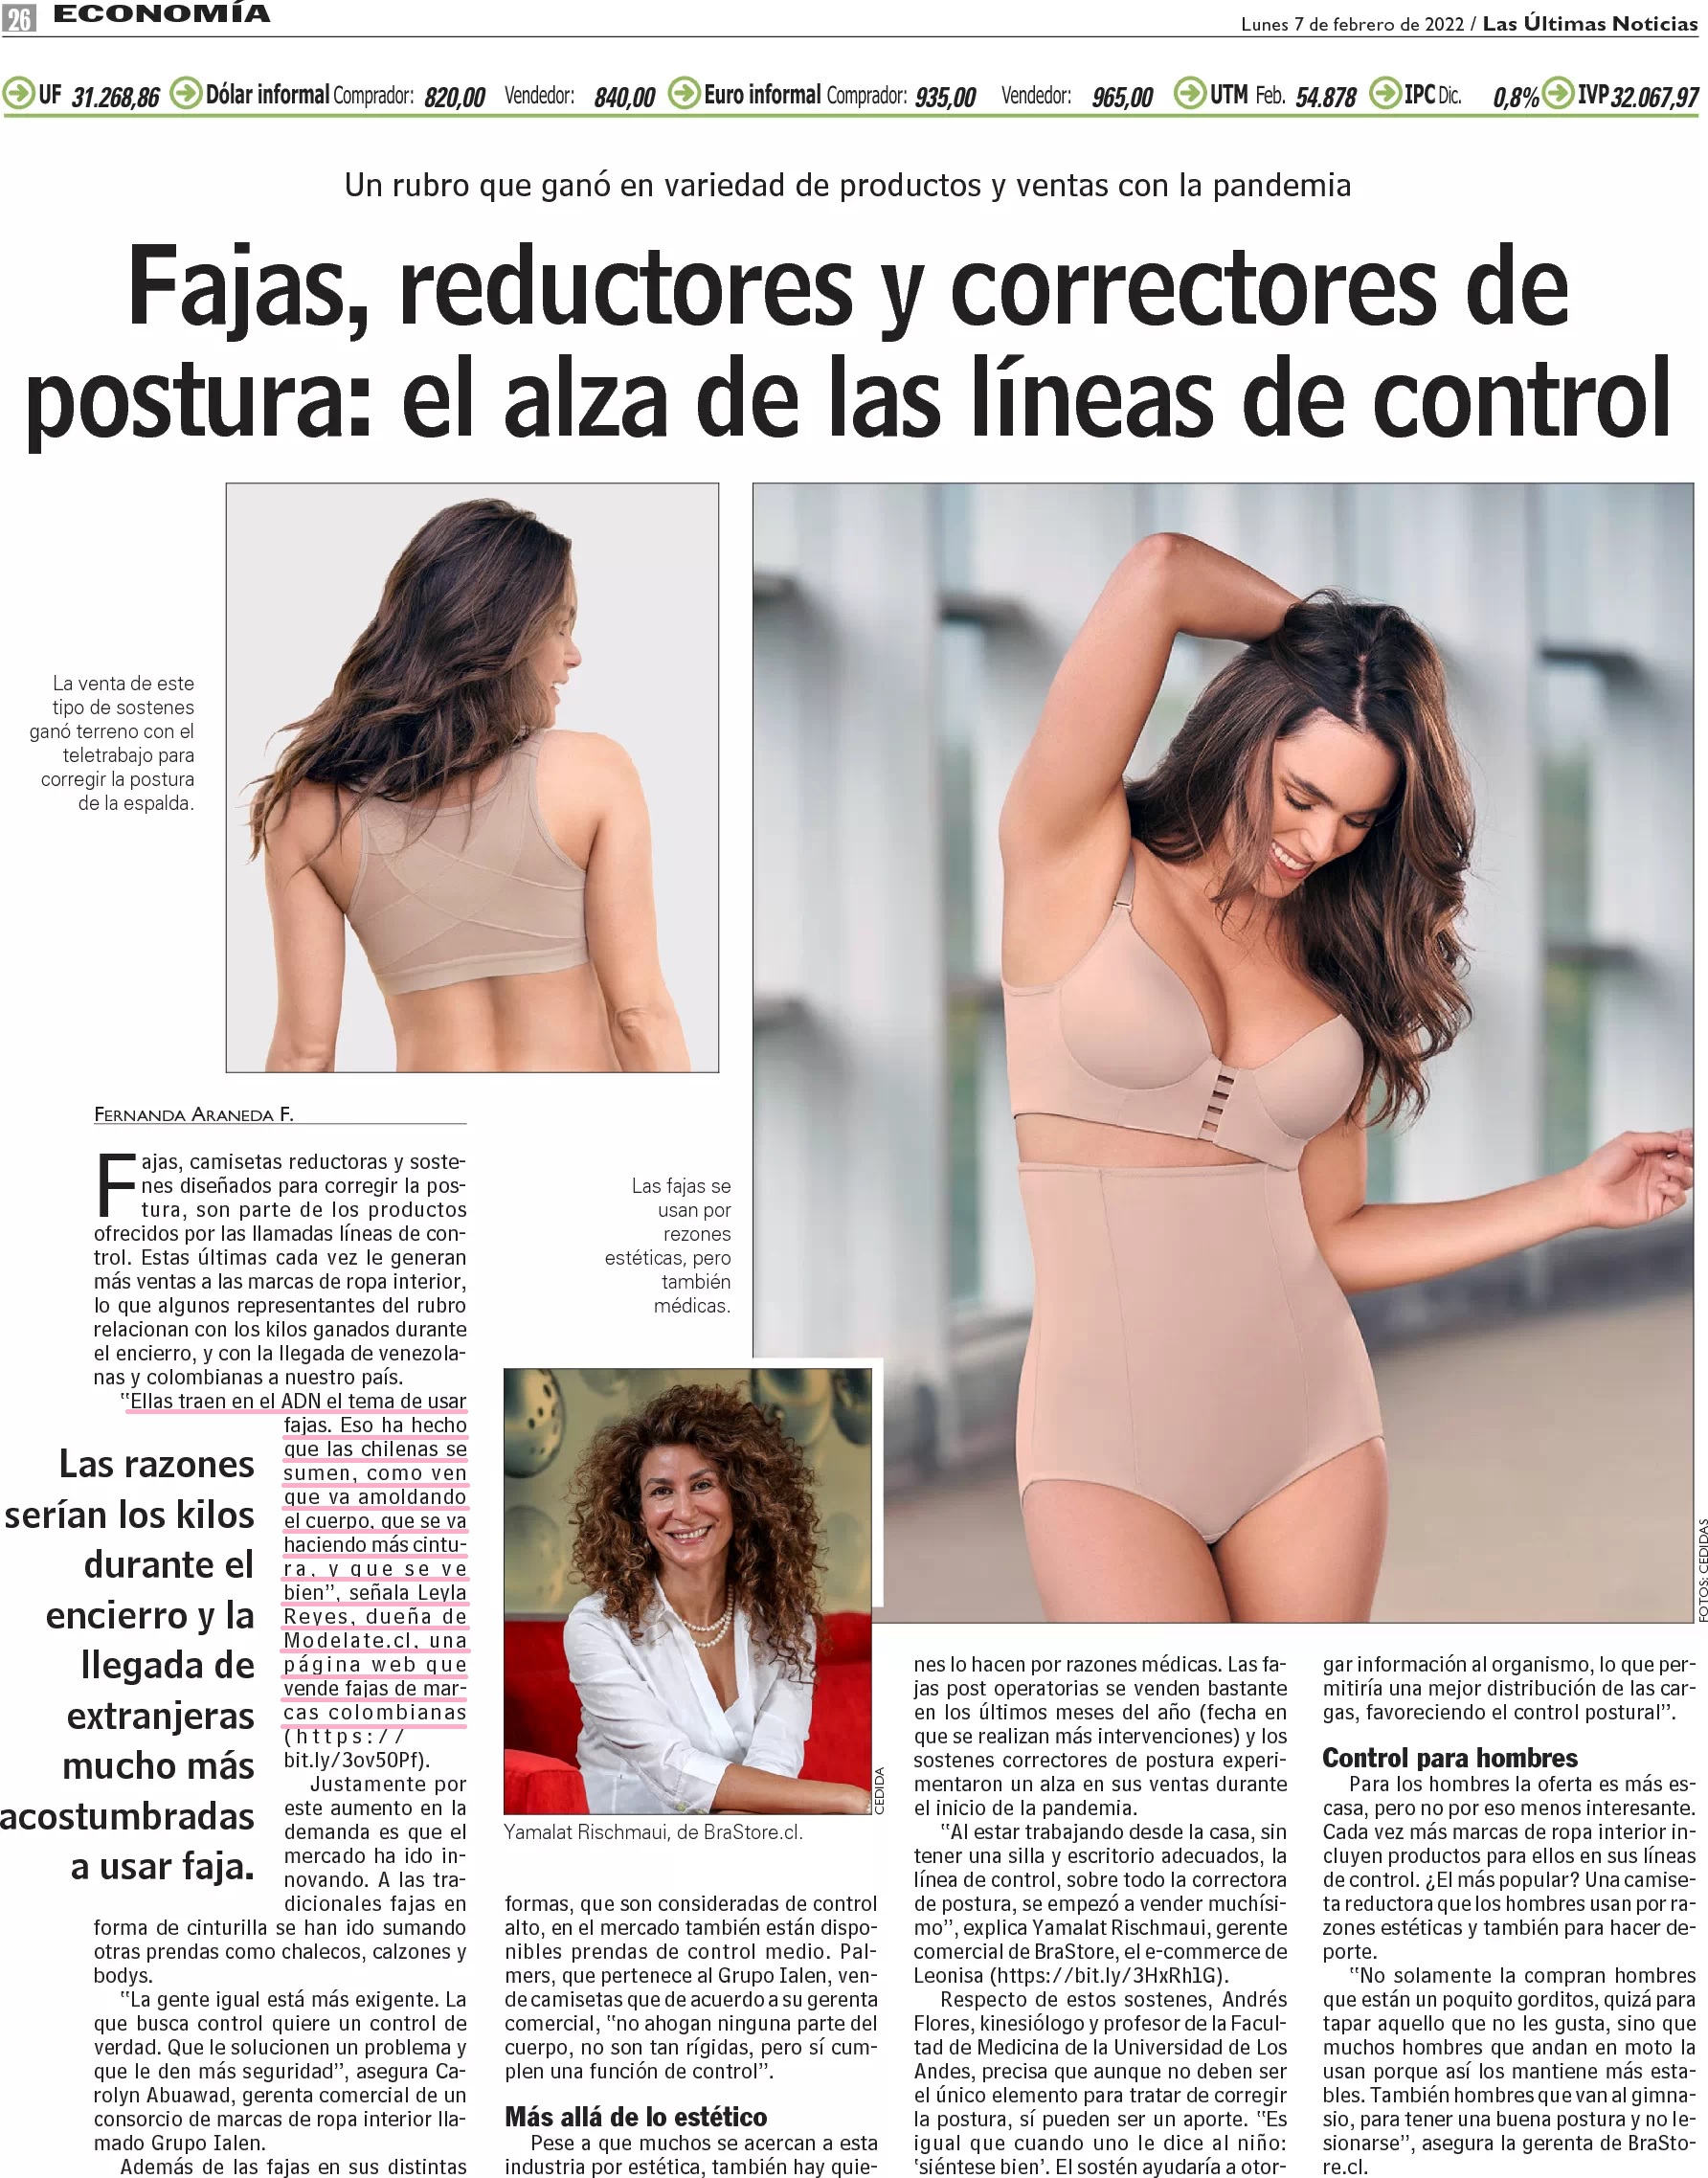 Fajas Reductoras en aumento en Chile. Entrevista a Modelate.cl para diario LUN.